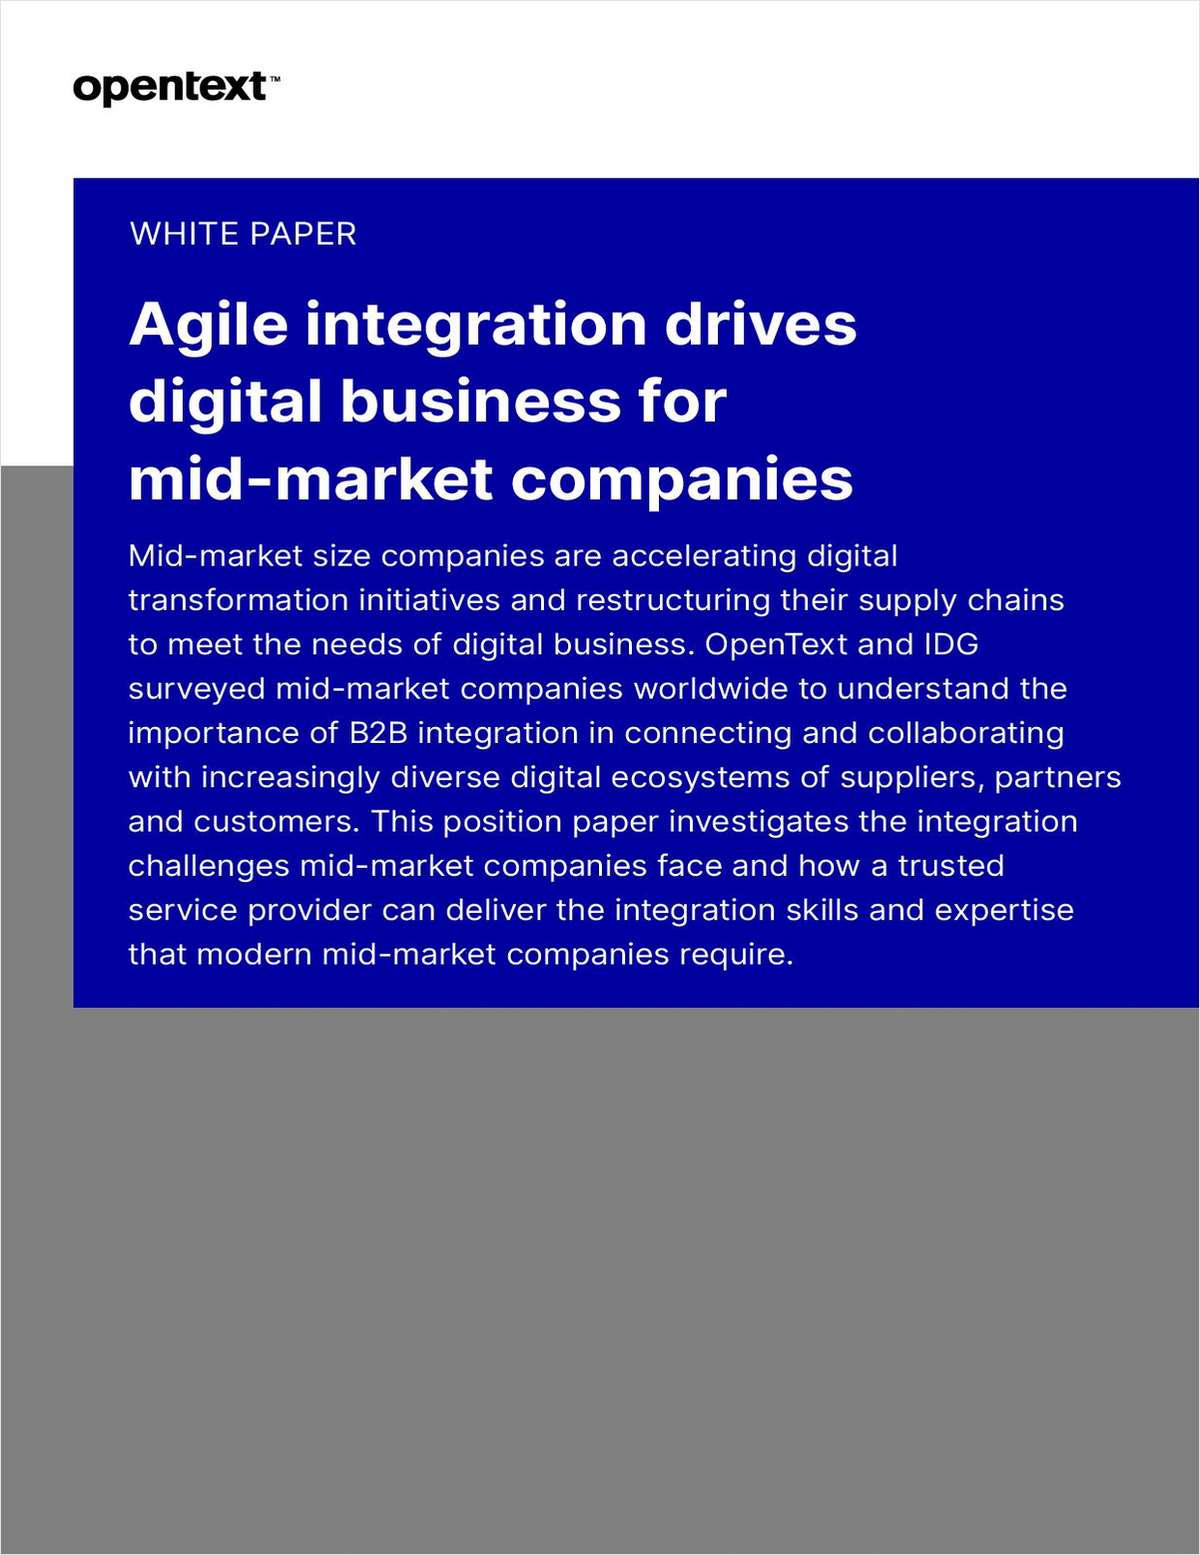 Agile Integration Drives Digital Business for Mid-Market Companies